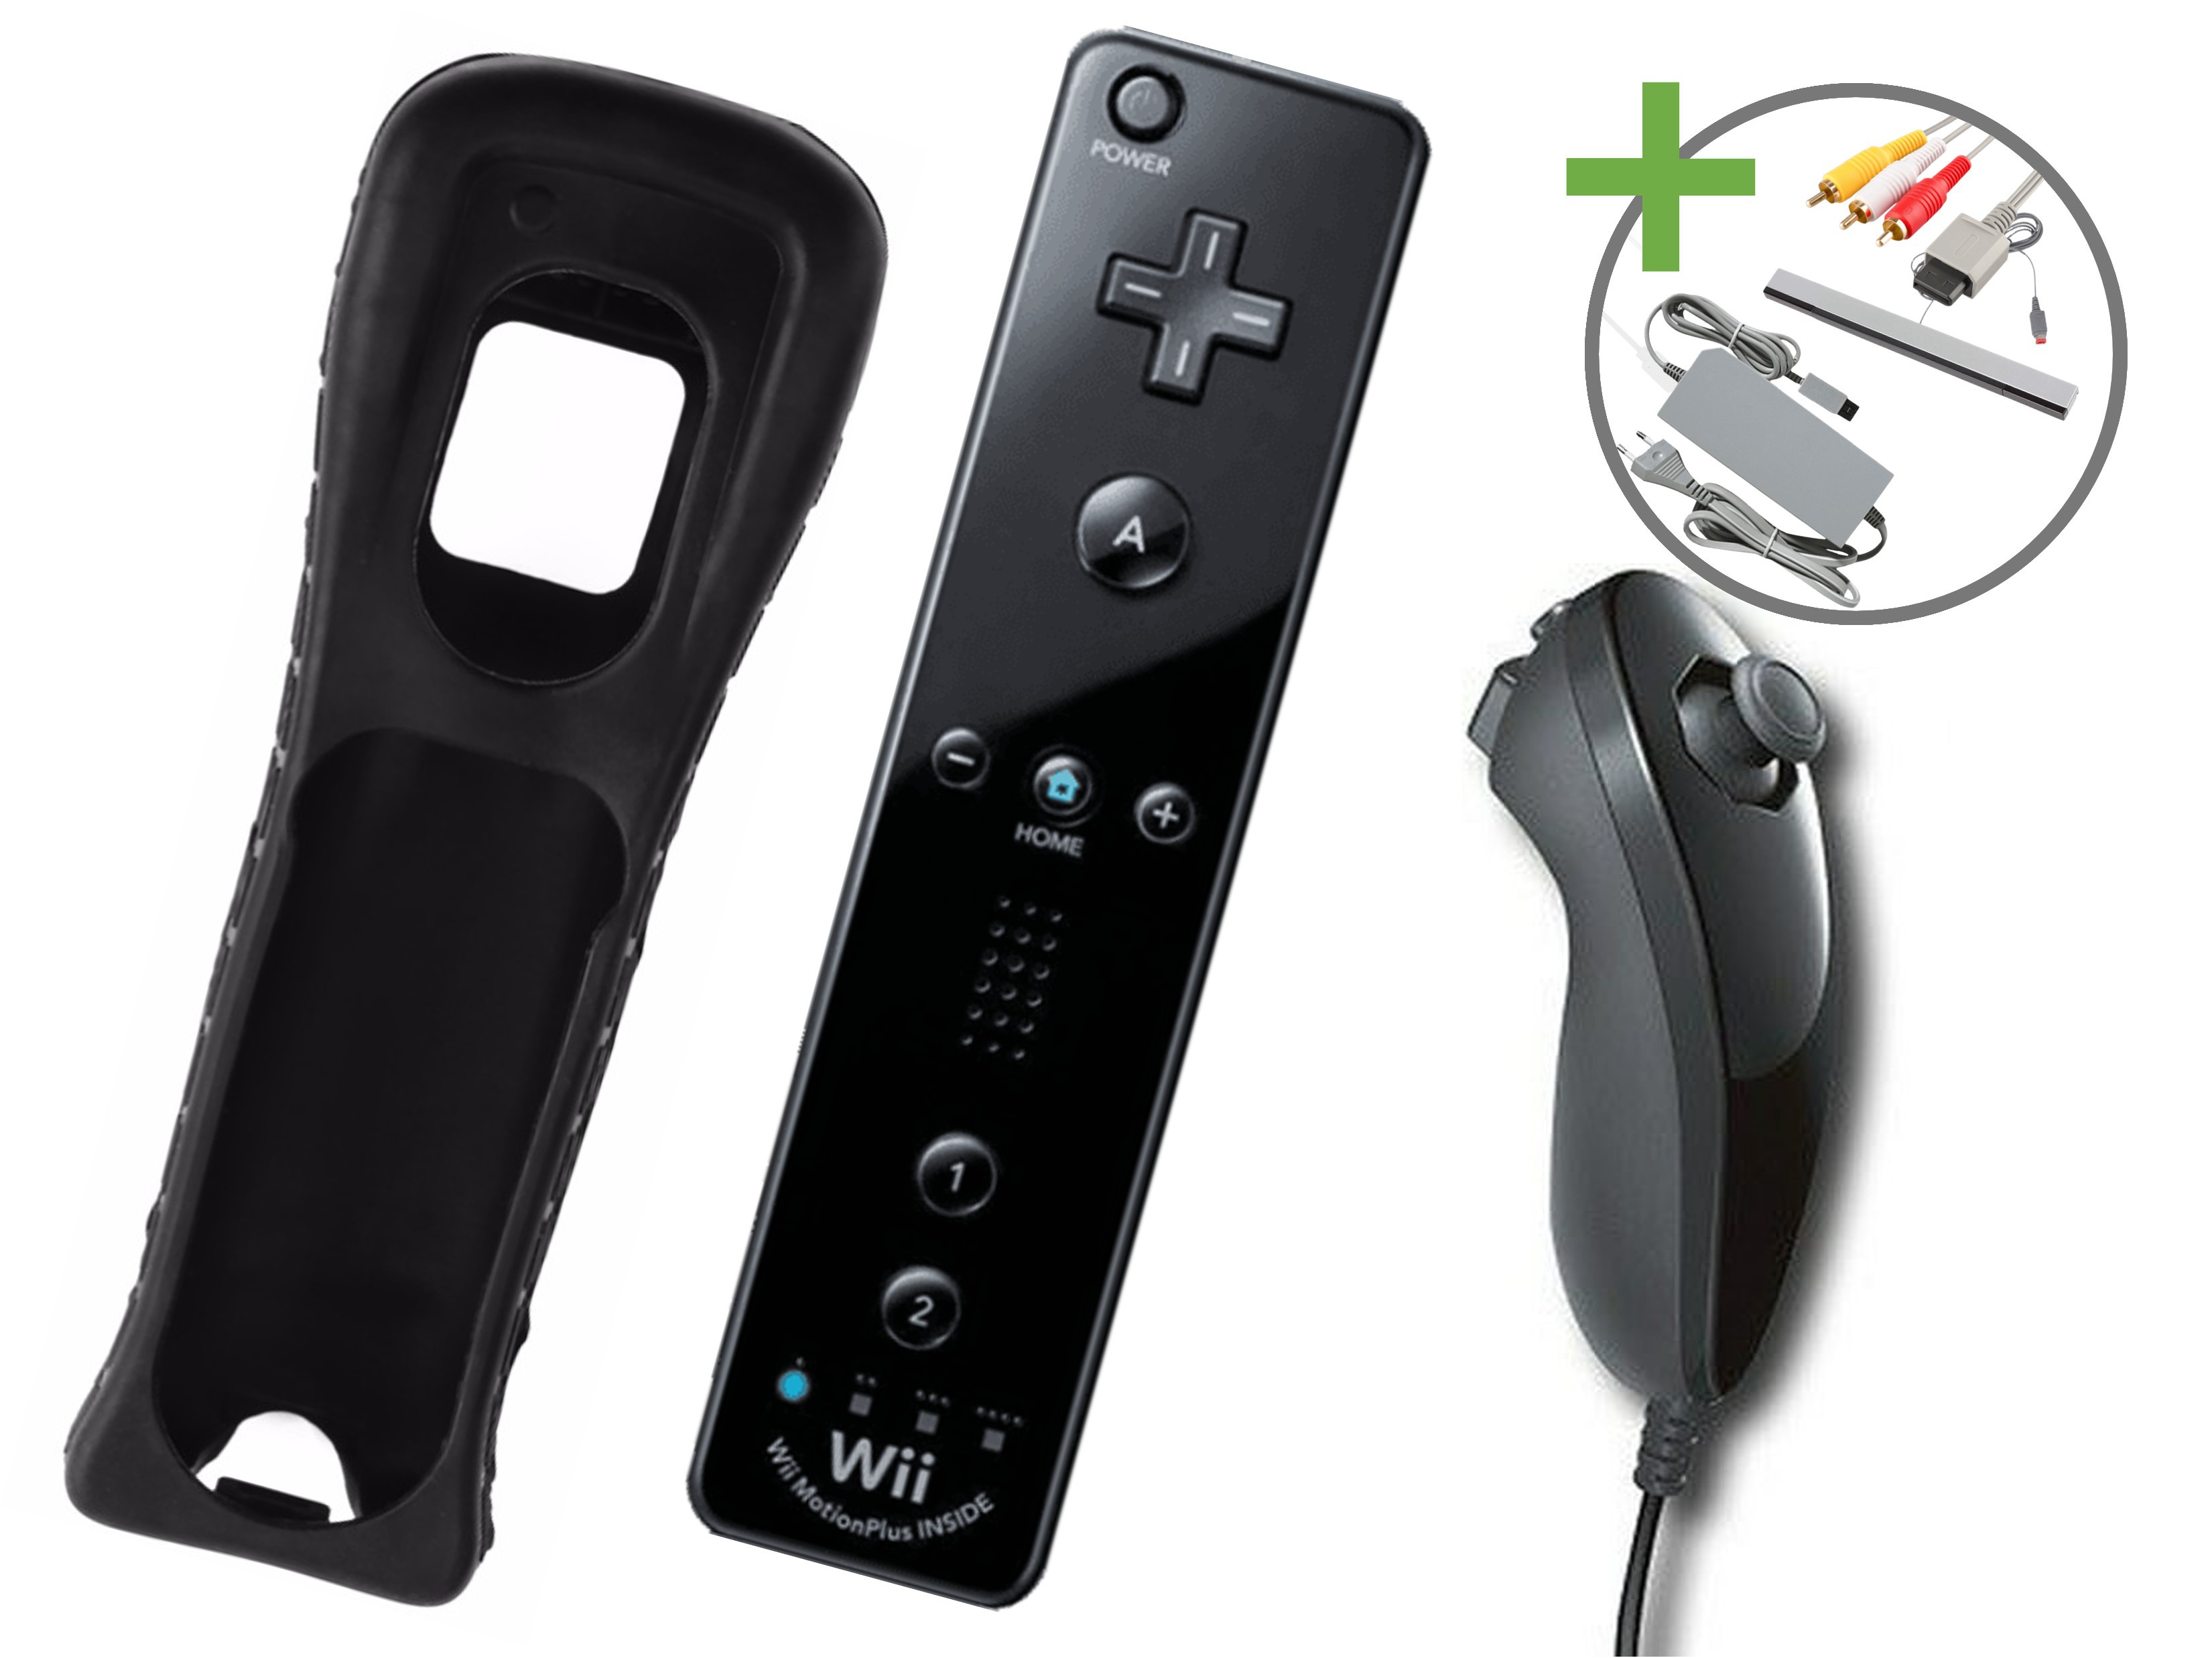 Nintendo Wii Starter Pack - Mario Kart Motion Plus Black Edition [Complete] - Wii Hardware - 4